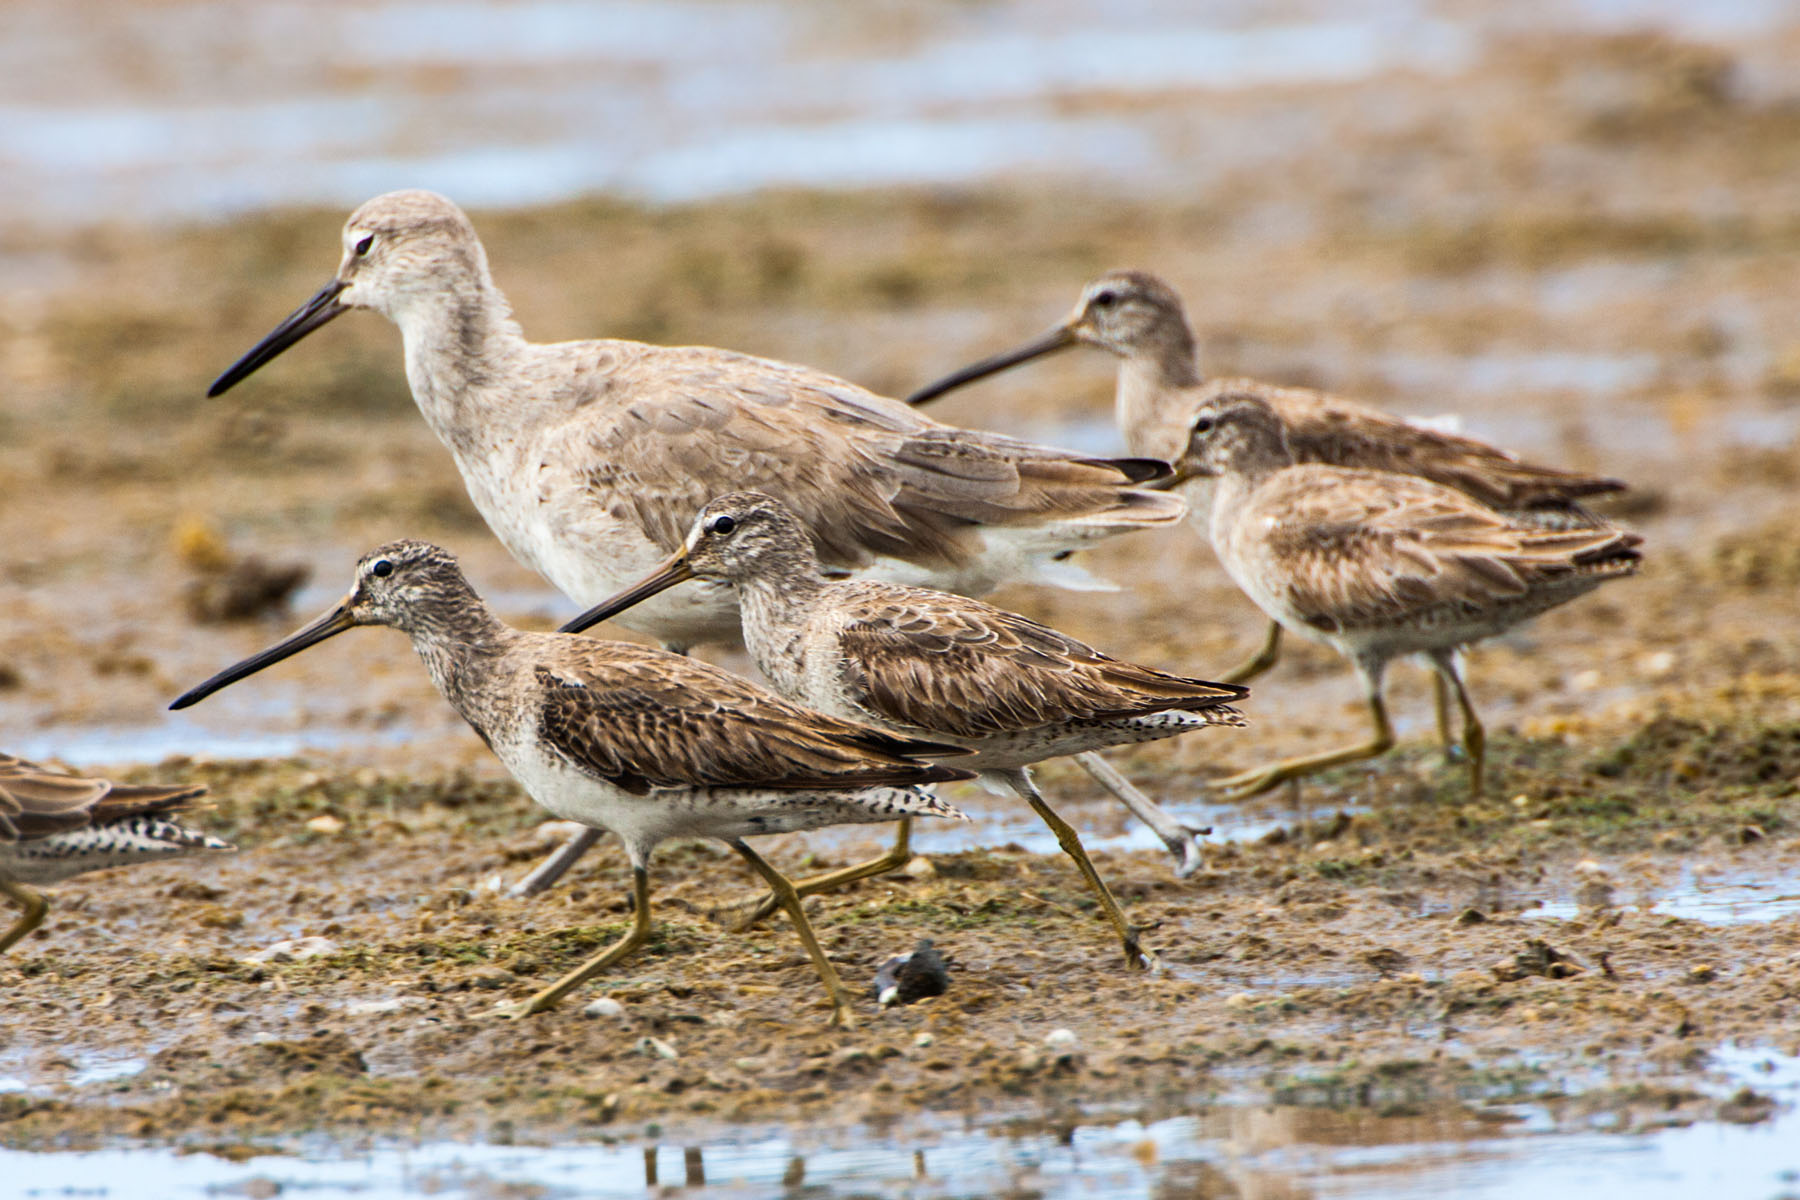 Shorebirds at "Ding" Darling NWR, Sanibel Island, Florida.  Click for next photo.